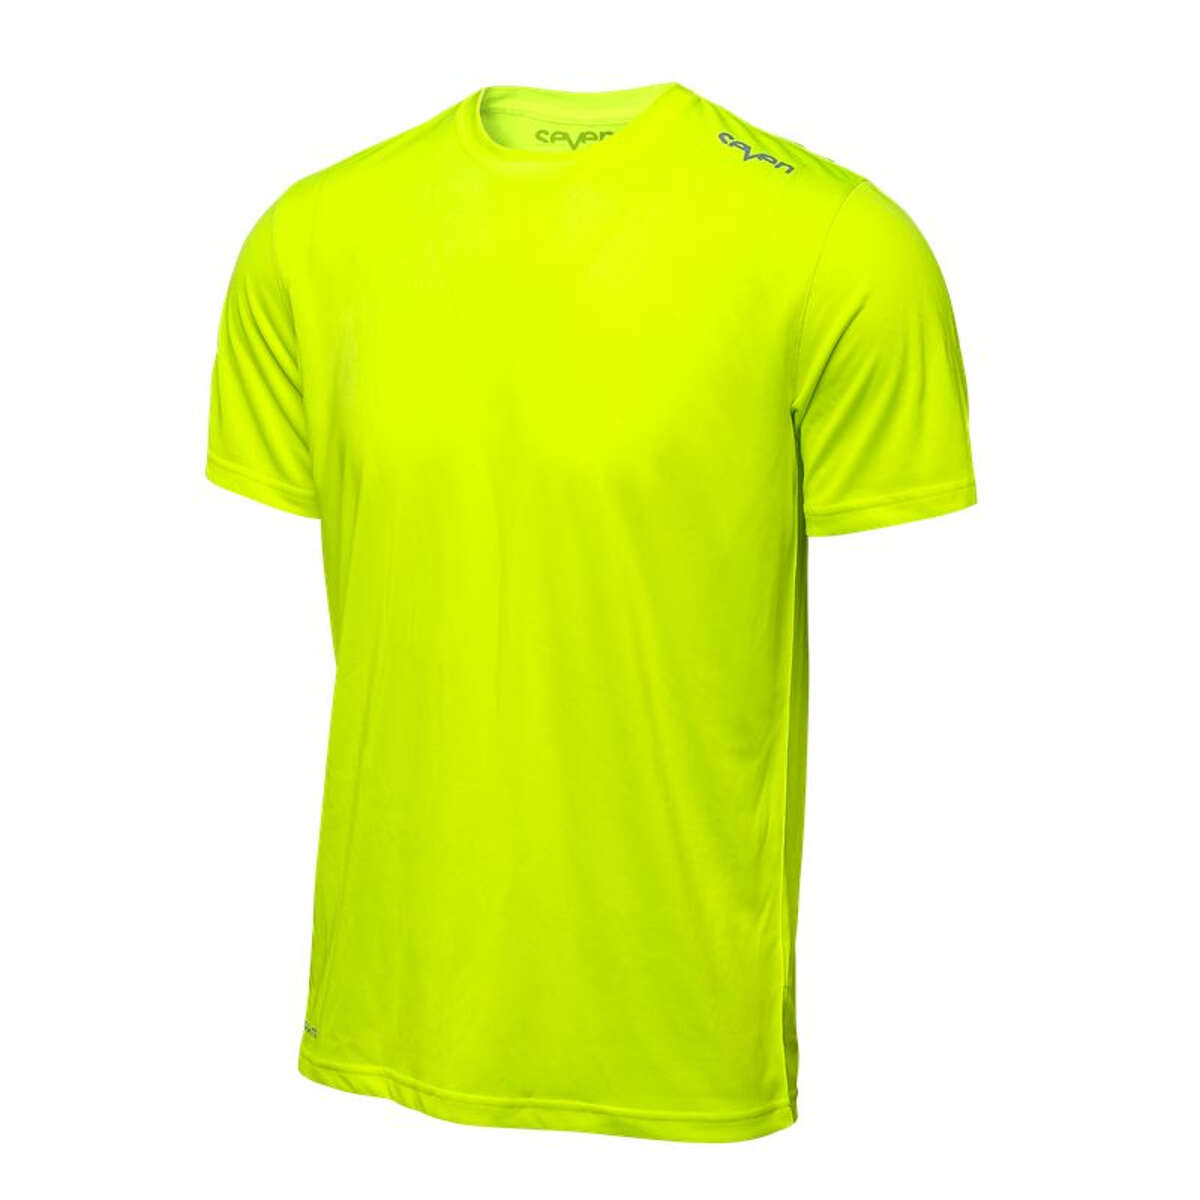 Seven MX Tech Shirt Elevate Flow Yellow